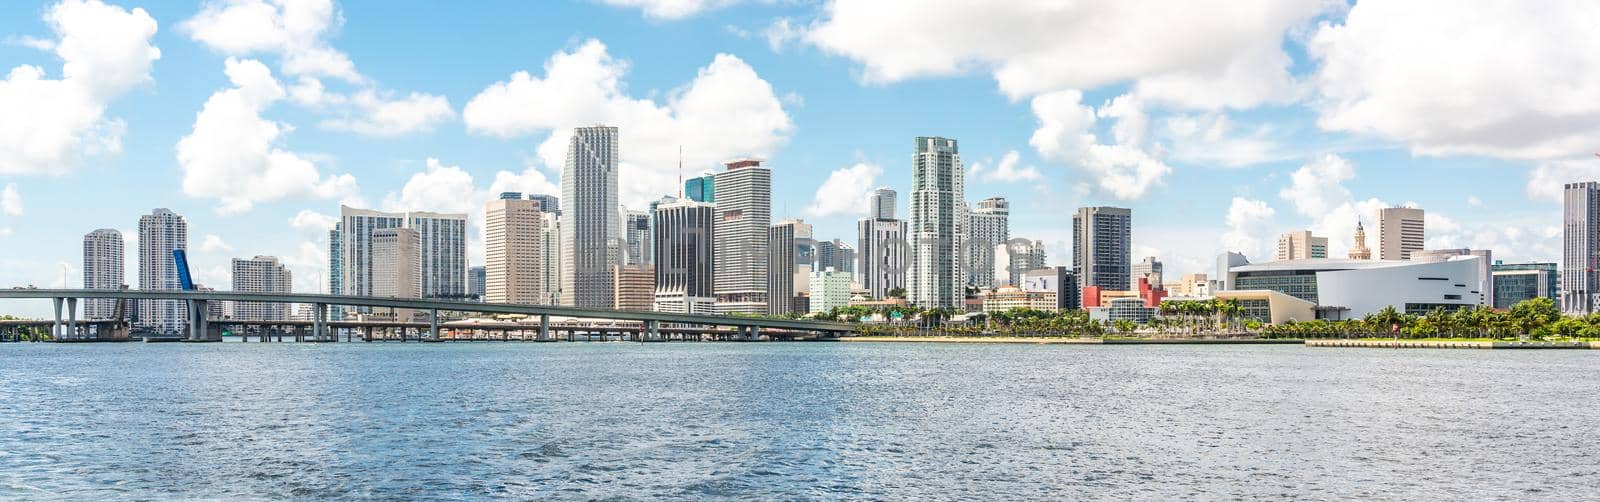 Miami, USA - September 11, 2019: Miami skyline with skyscrapers and bridge over the sea